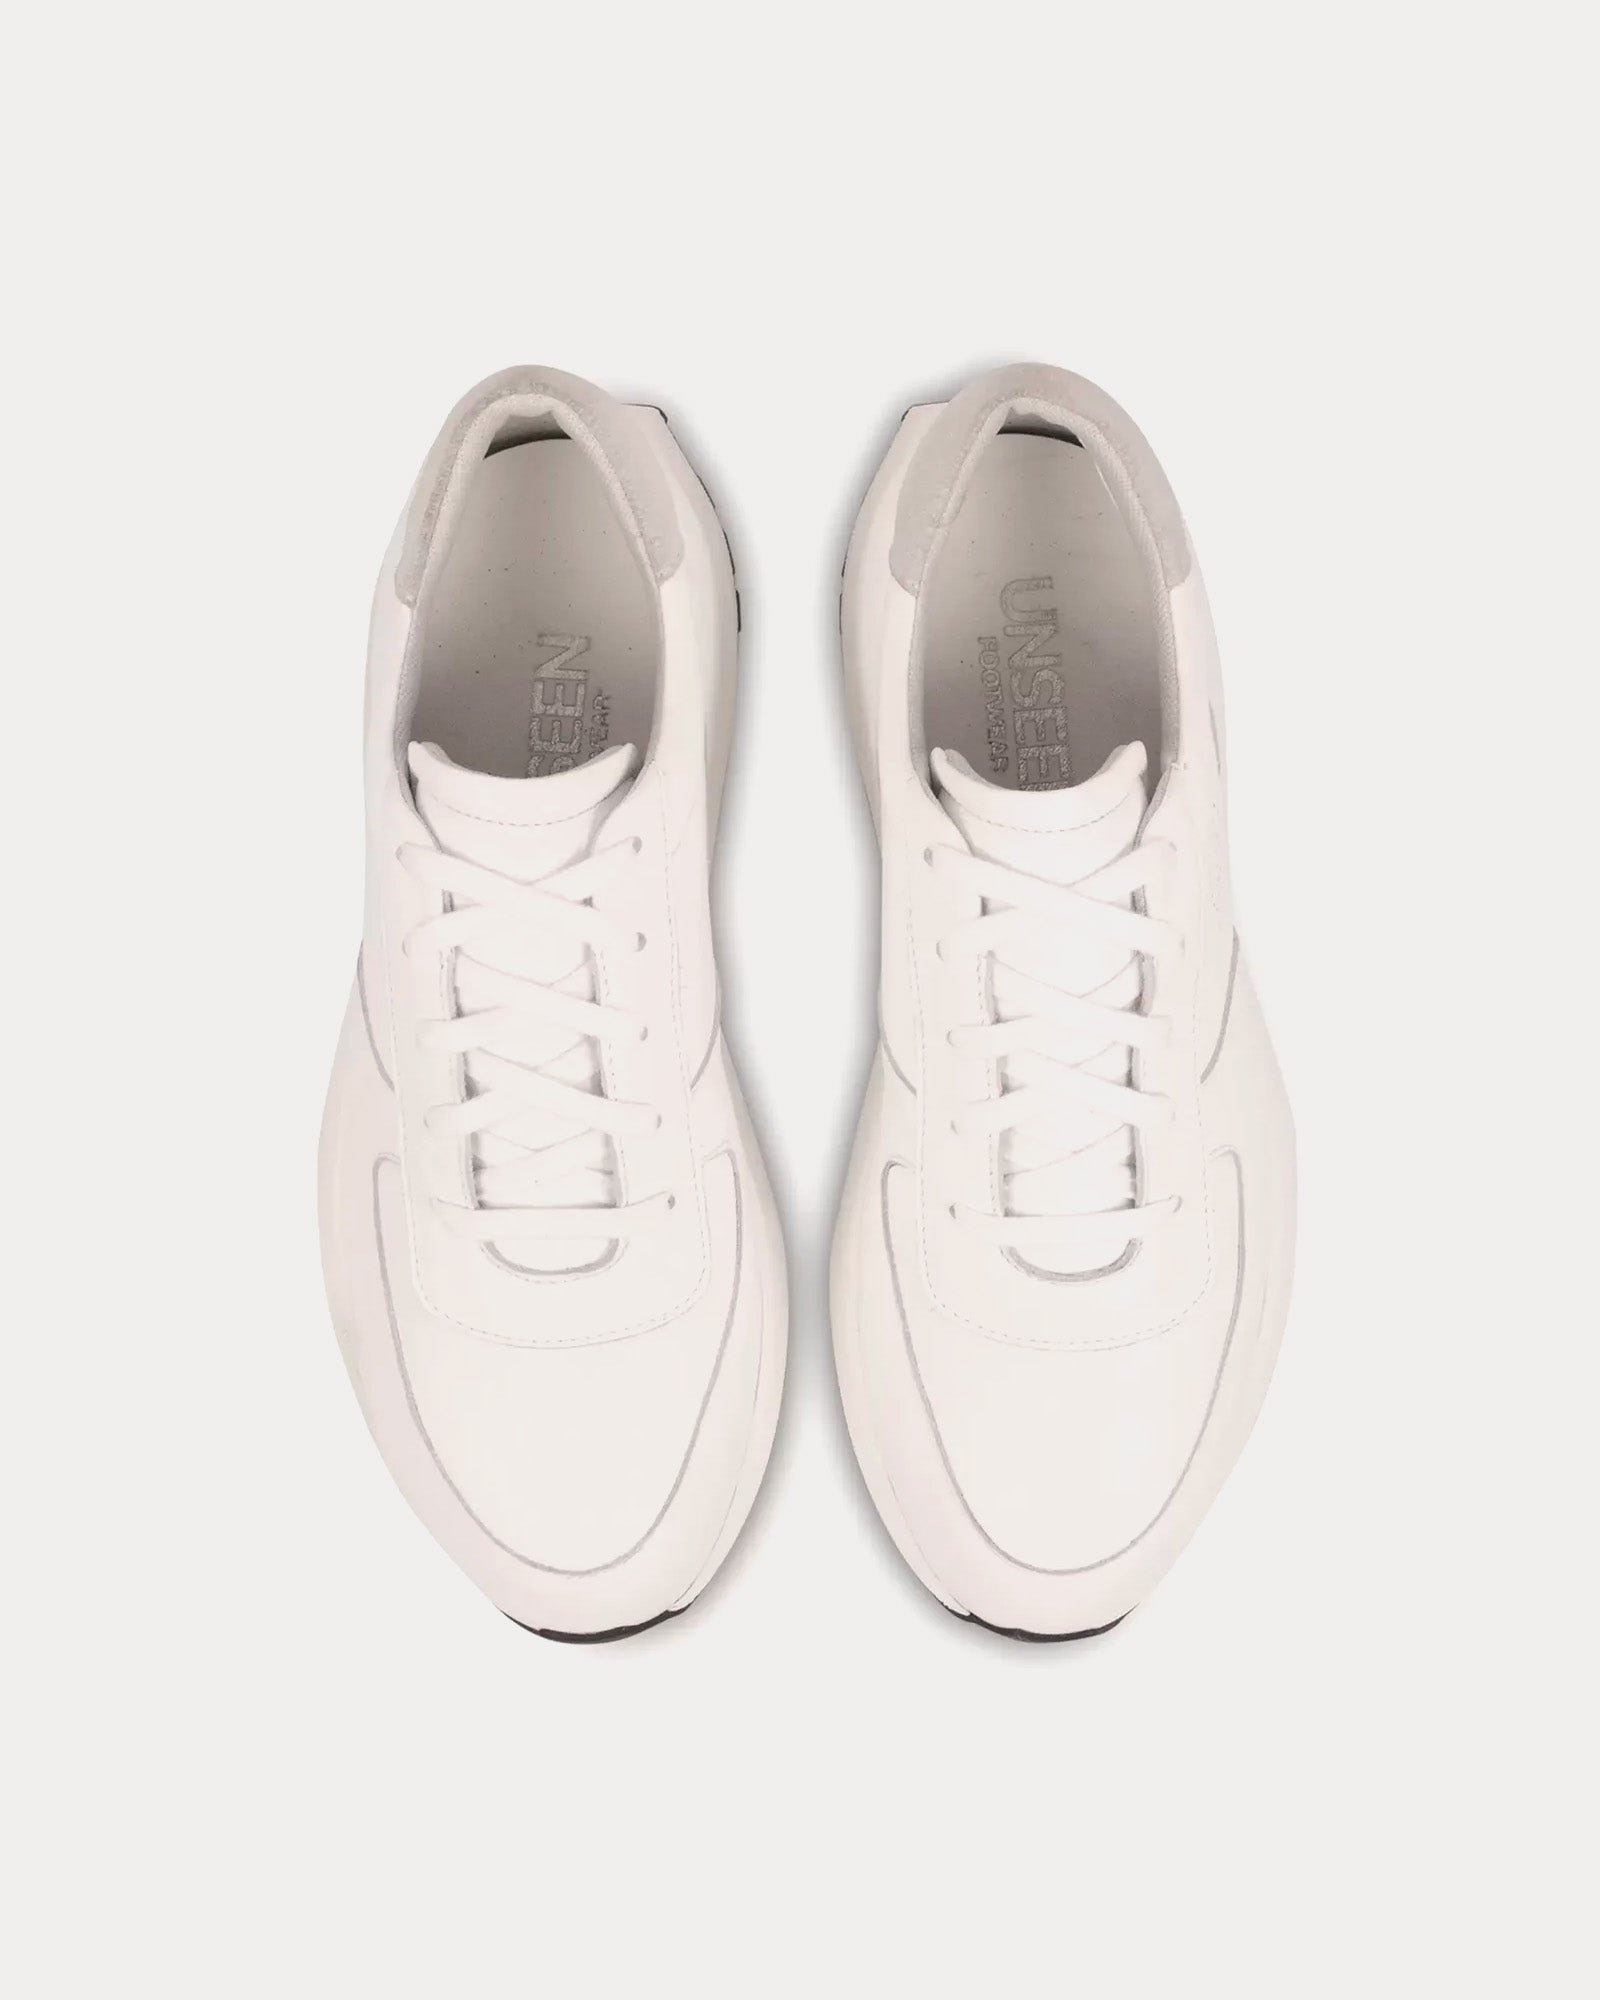 Unseen Footwear - Trinity Leather & Suede White / Bone Low Top Sneakers